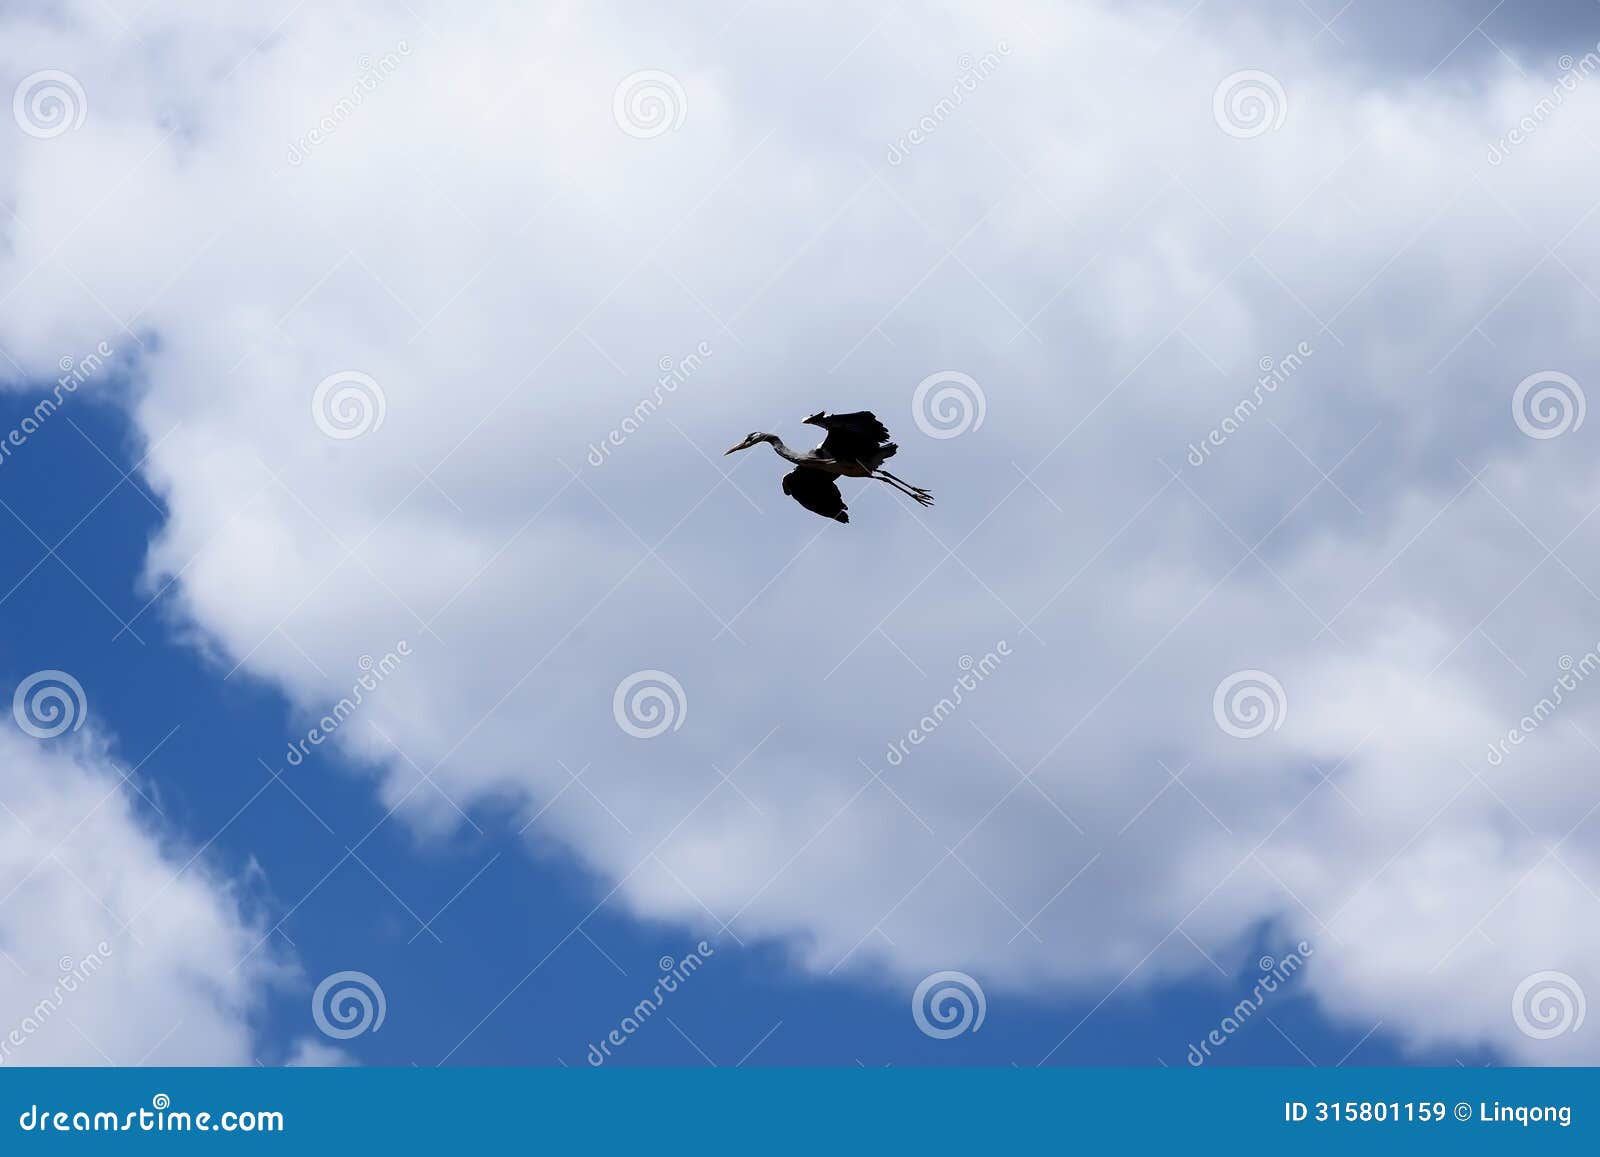 a gray crane soars in the sky..